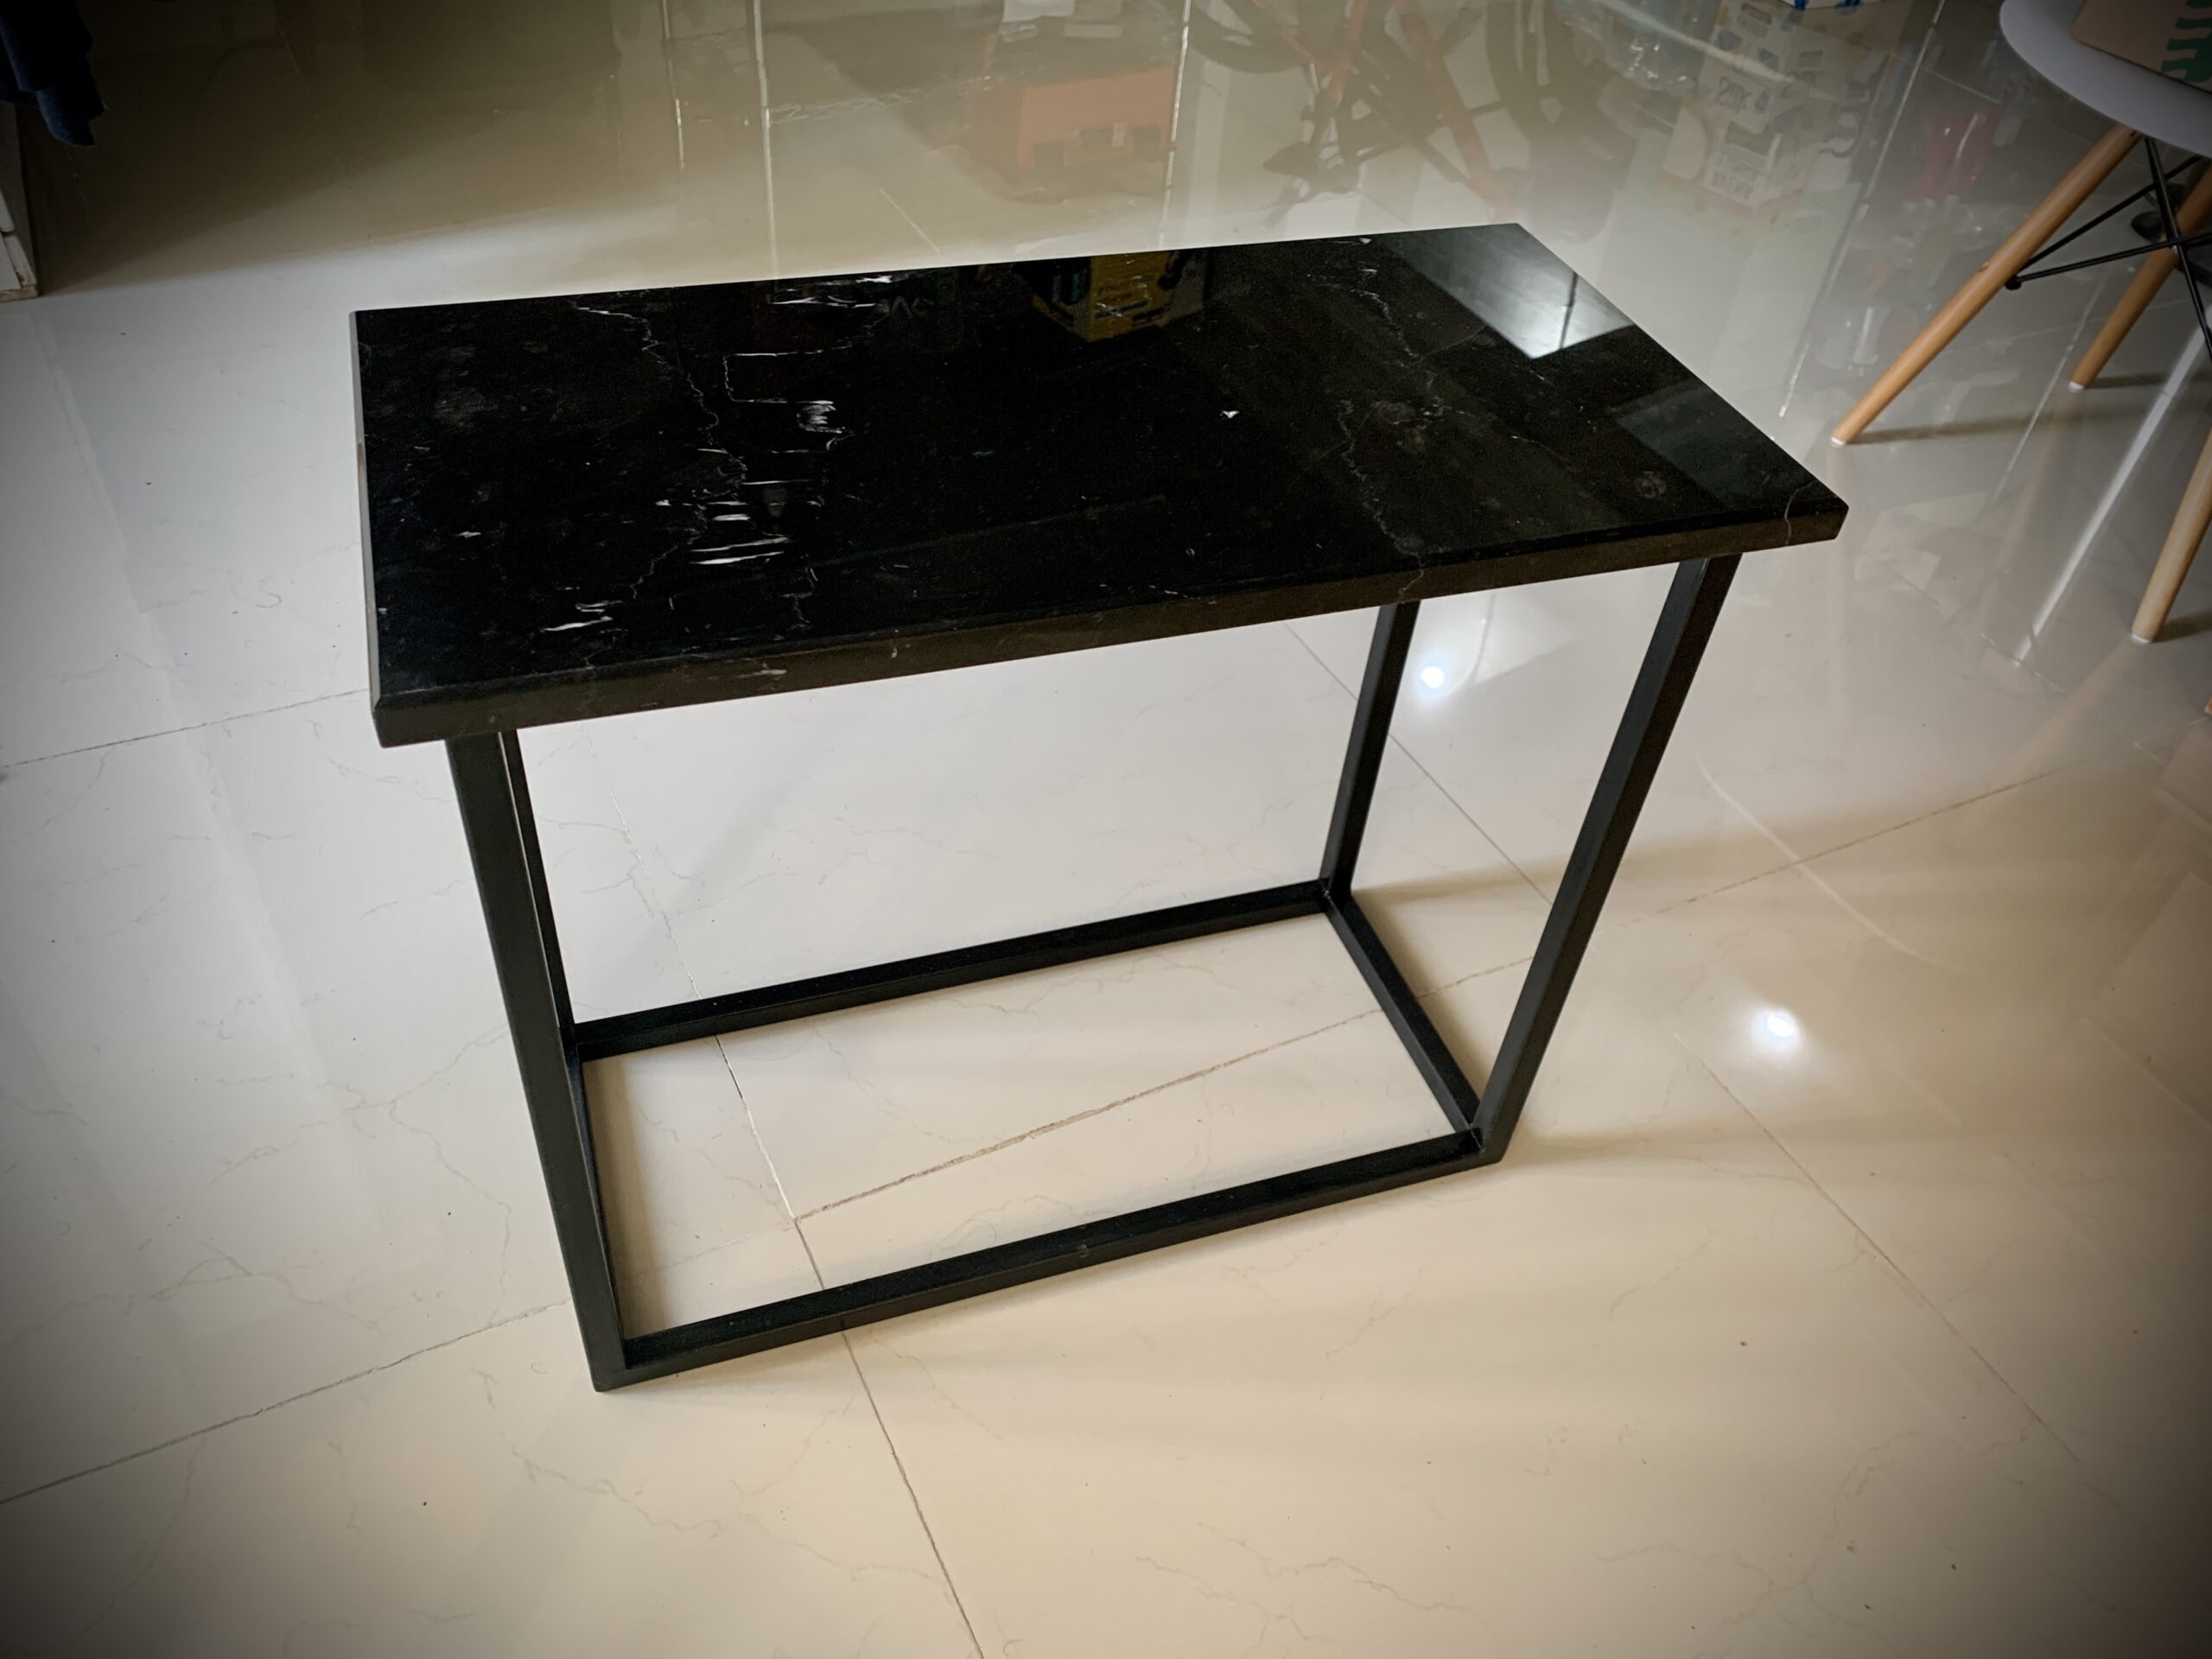 Mesa auxiliar, de mármol, en color negra, de 63x63x45cm